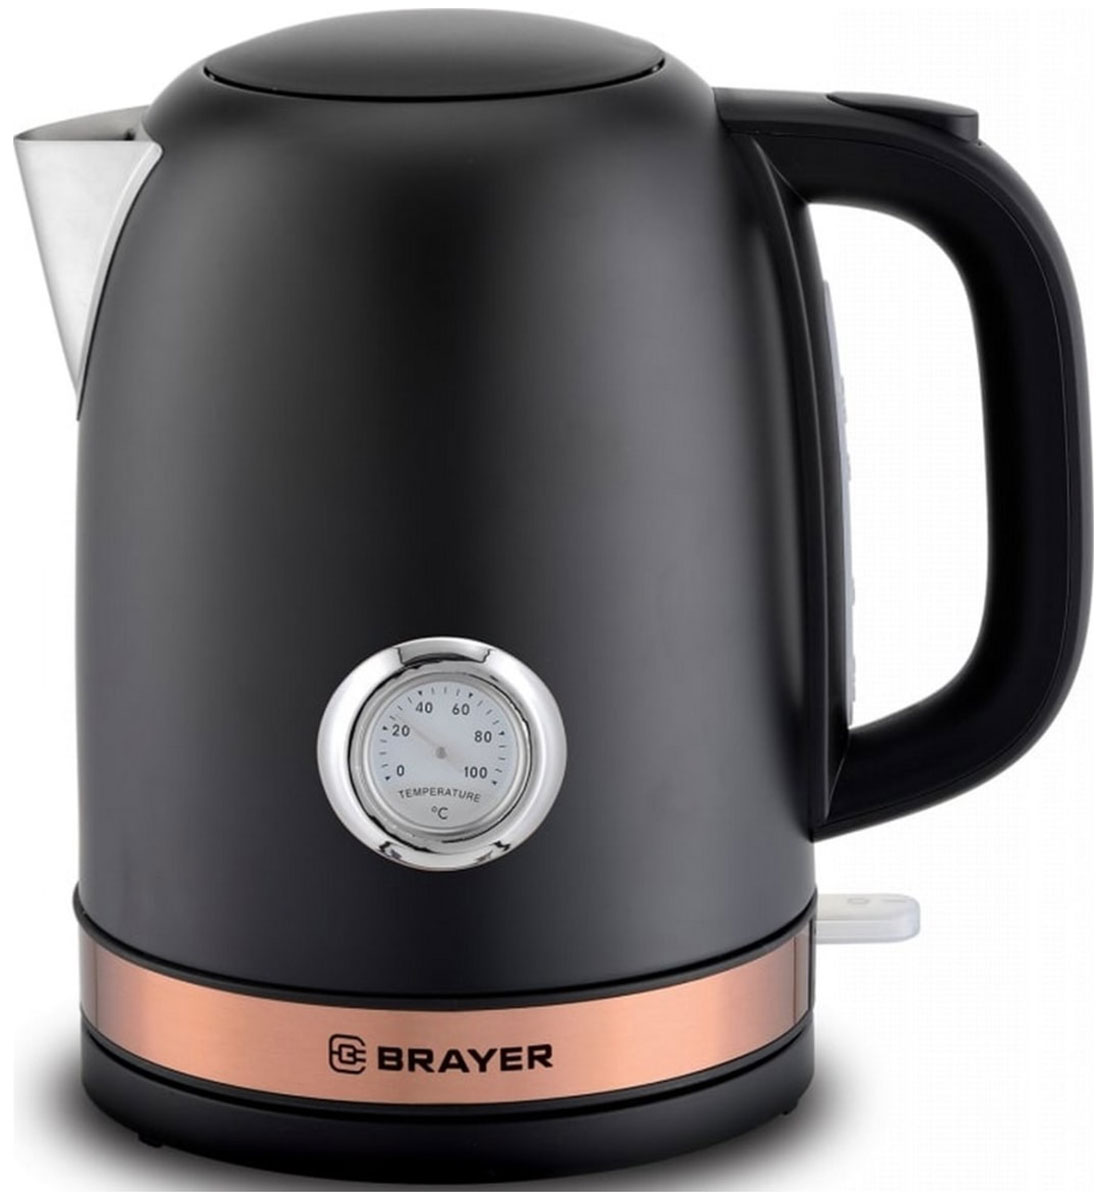 Чайник электрический BRAYER BR1005BK